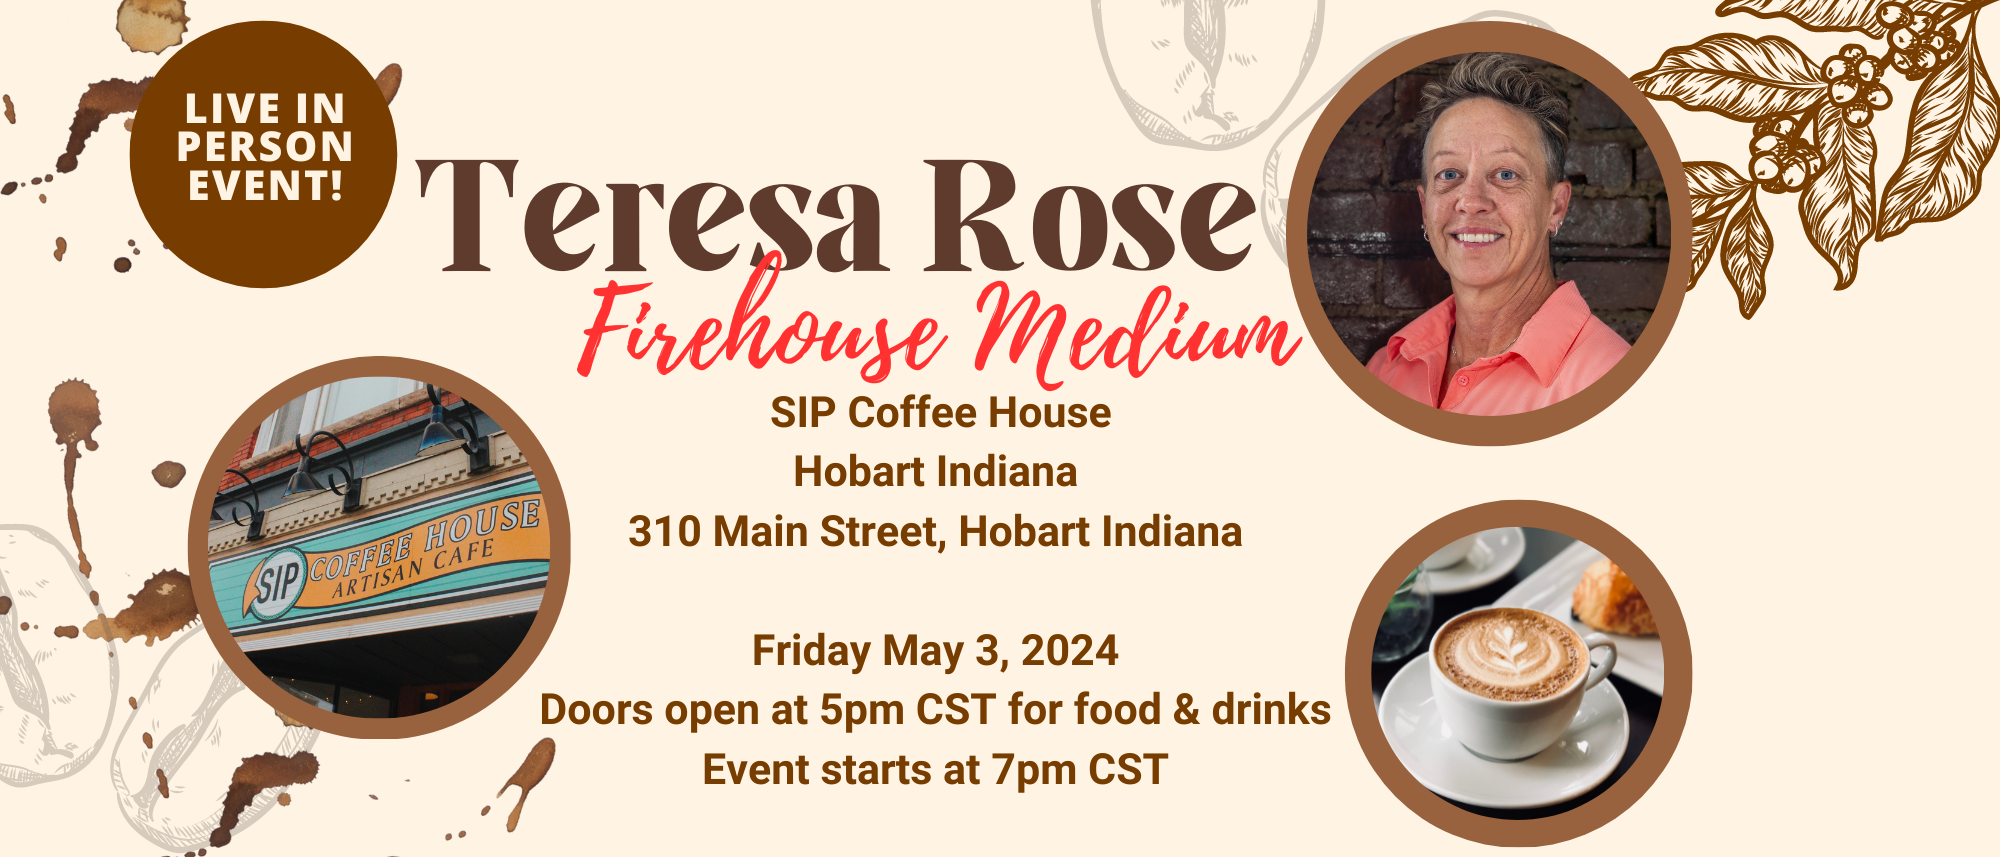 Teresa Rose Firehouse Medium at SIP Coffee House